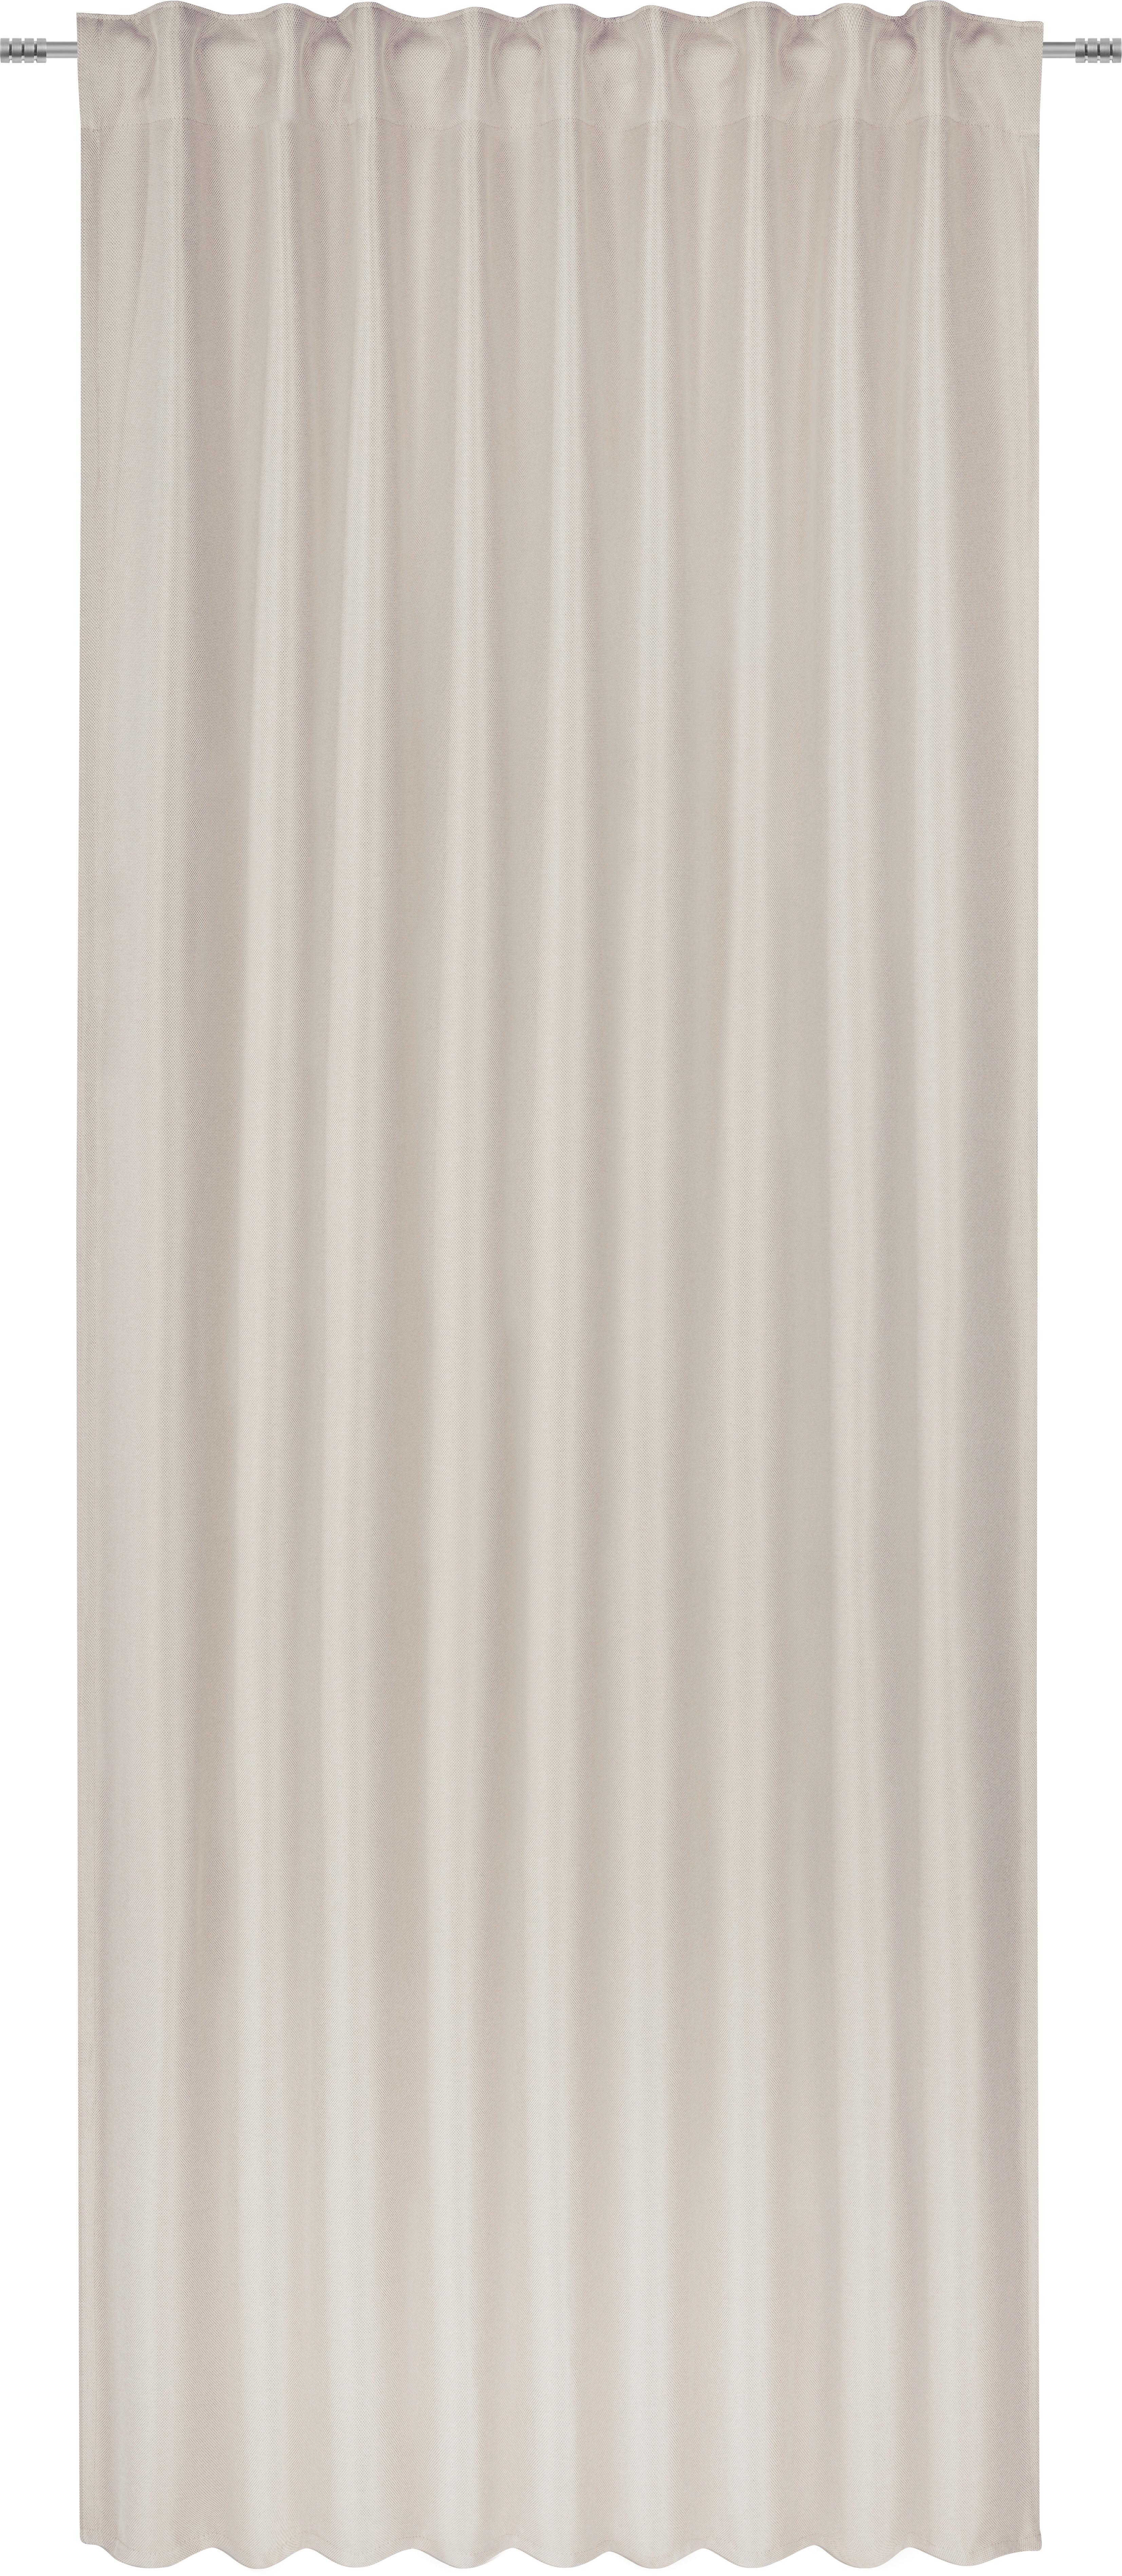 Verdunkelungsvorhang Riccarda ca. 135x255cm - Creme, MODERN, Textil (135/255cm) - Premium Living